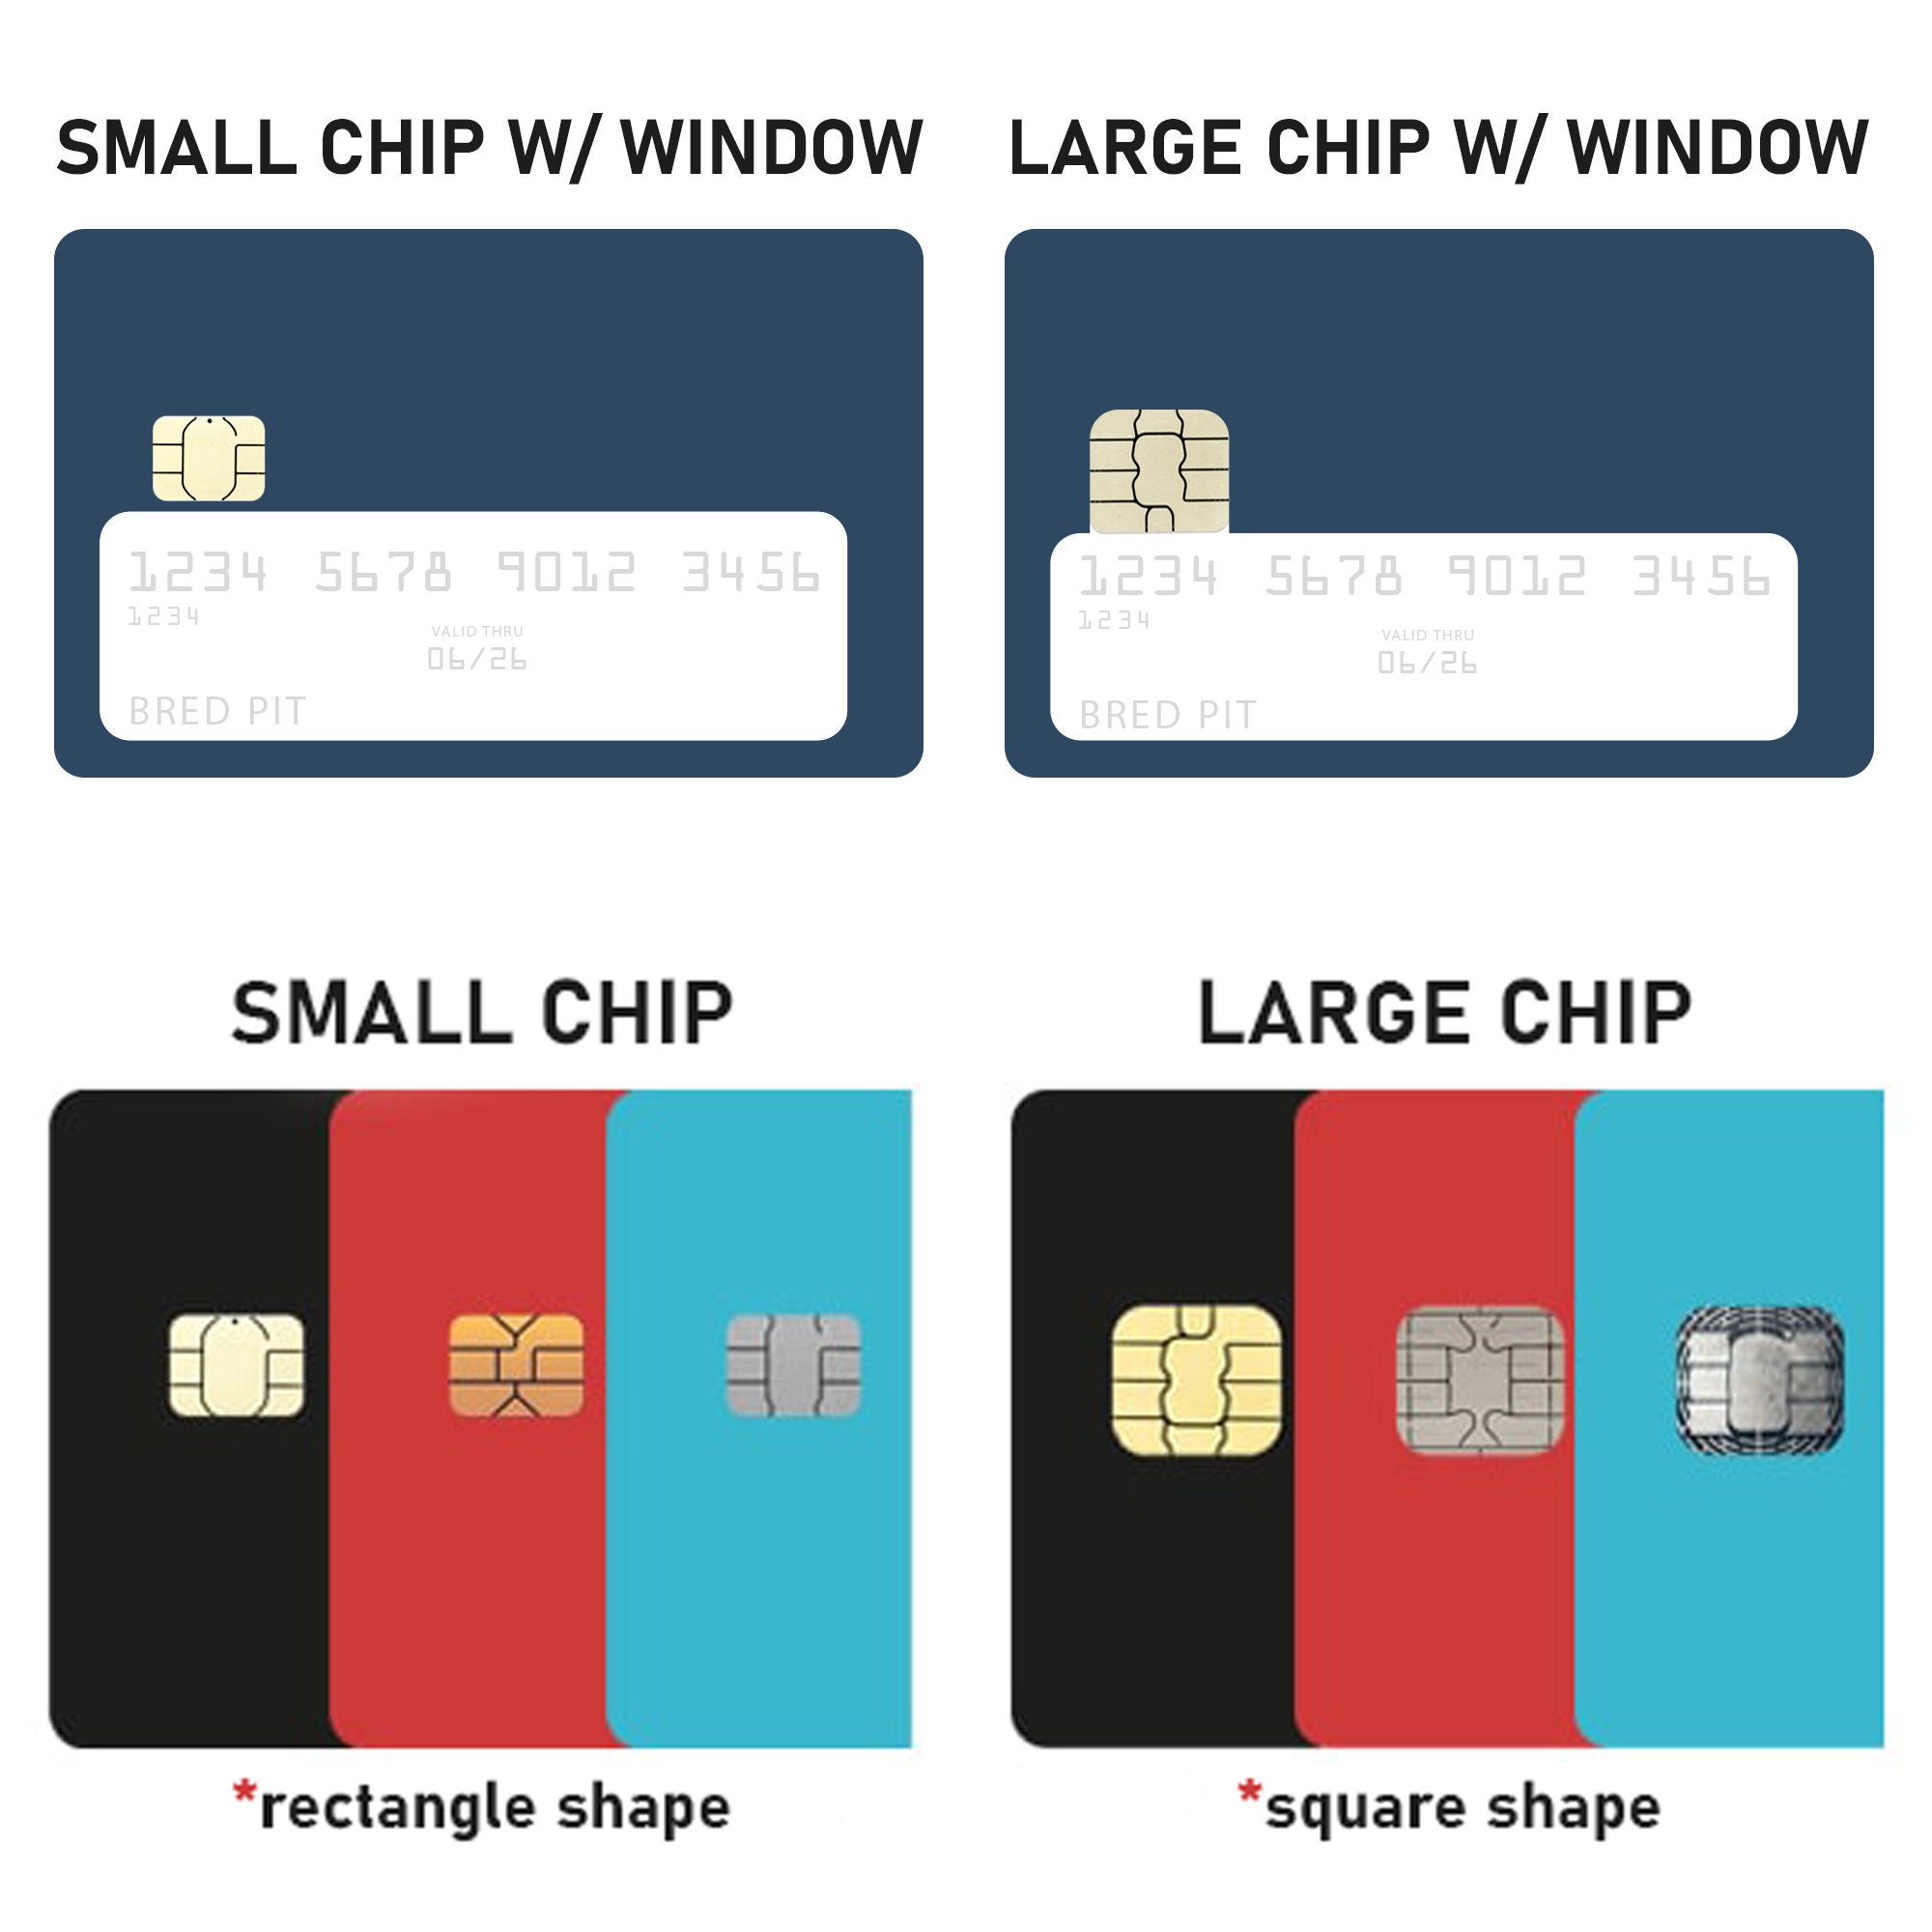 Create Your Own - Custom Credit Card Skin Debit Card Skin